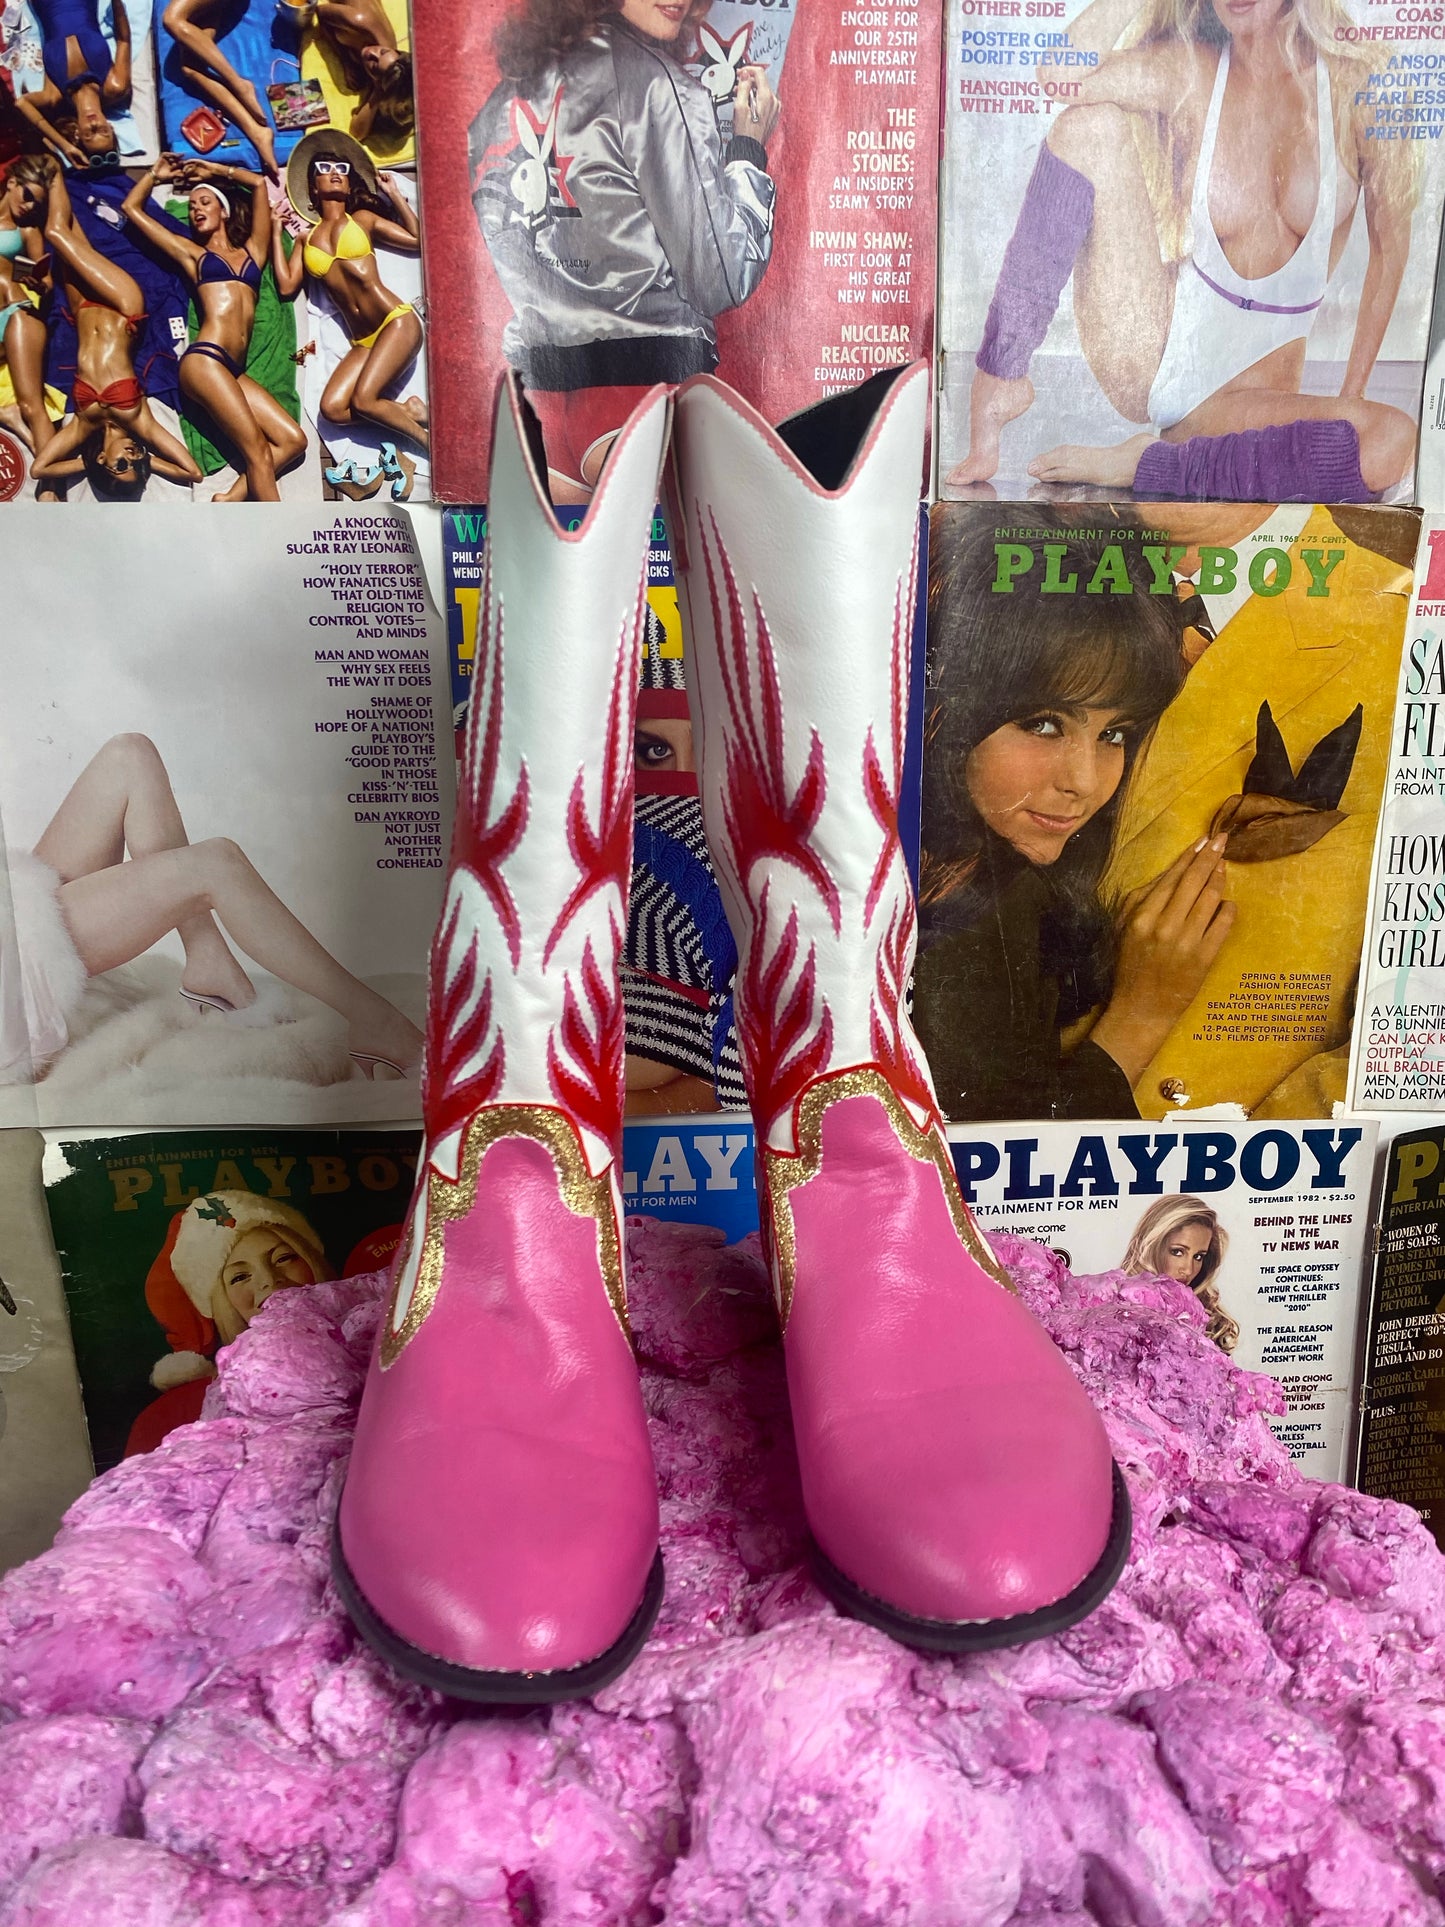 “Pink Lady” Cowboy boots